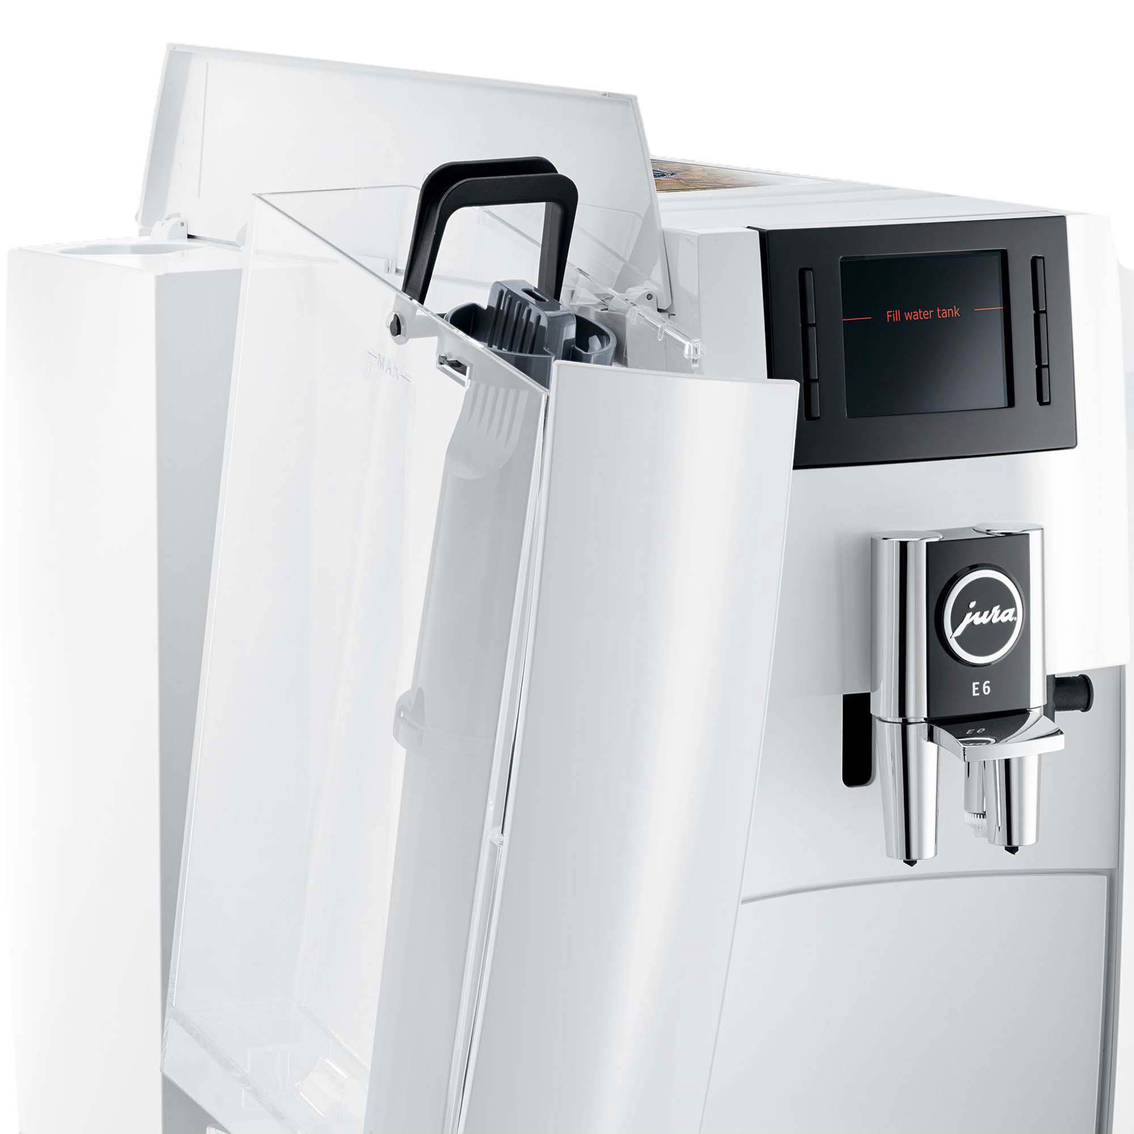 Jura E 6 Piano White Automatic Coffee Machine - Image 5 of 8